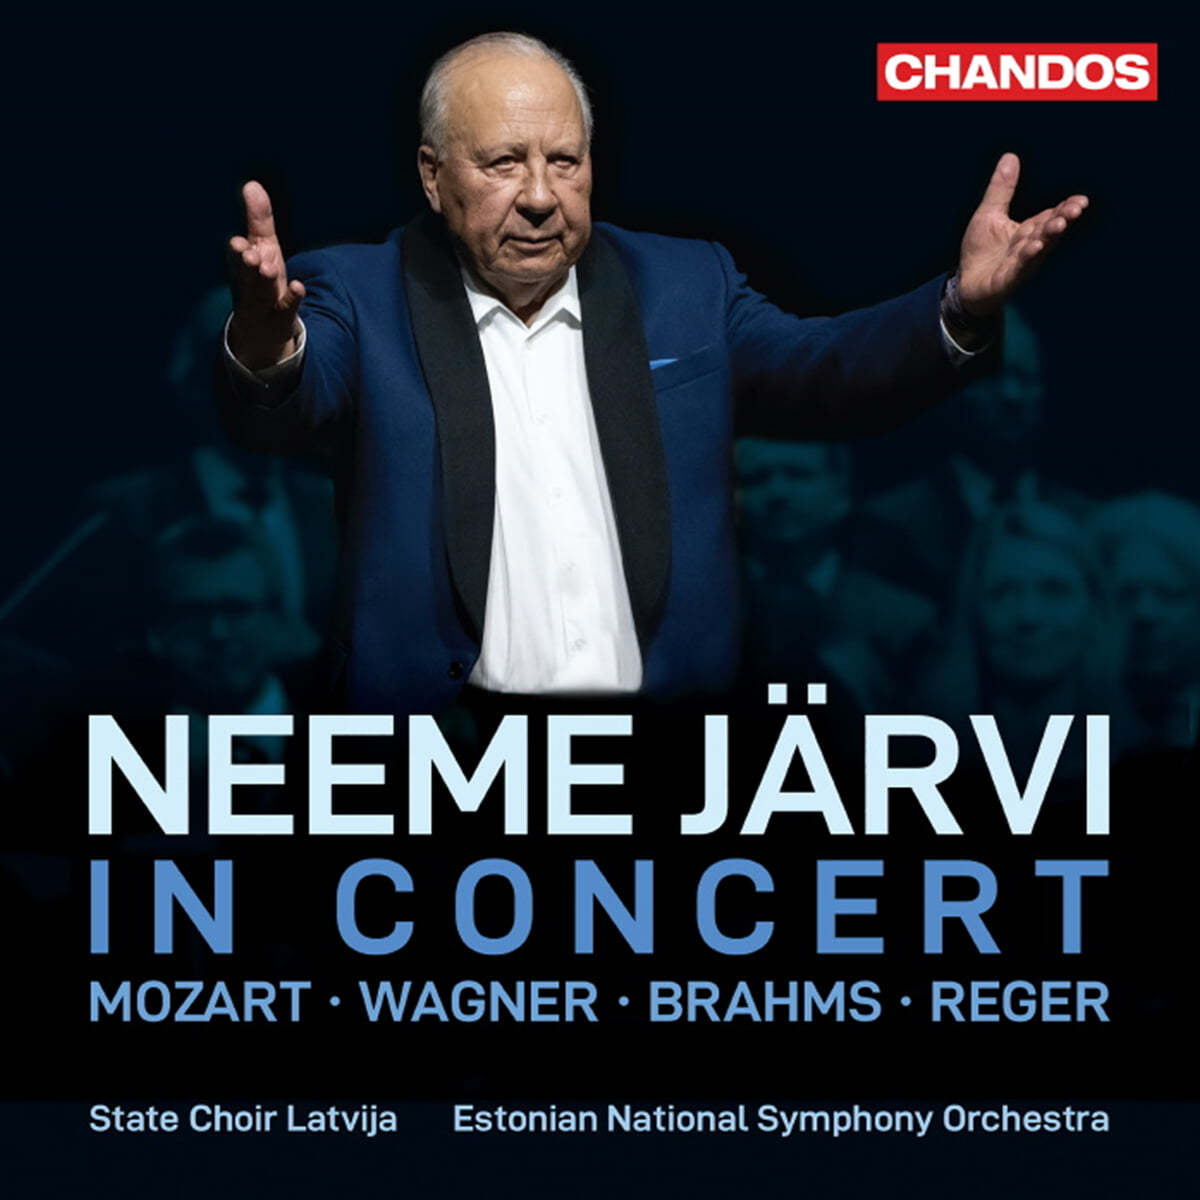 Neeme Jarvi 네메 야르비 인 콘서트 - 모차르트 / 바그너 / 브람스 / 레거 (Neeme Jarvi In Concert - Mozart / Wagner / Brahms / Reger)